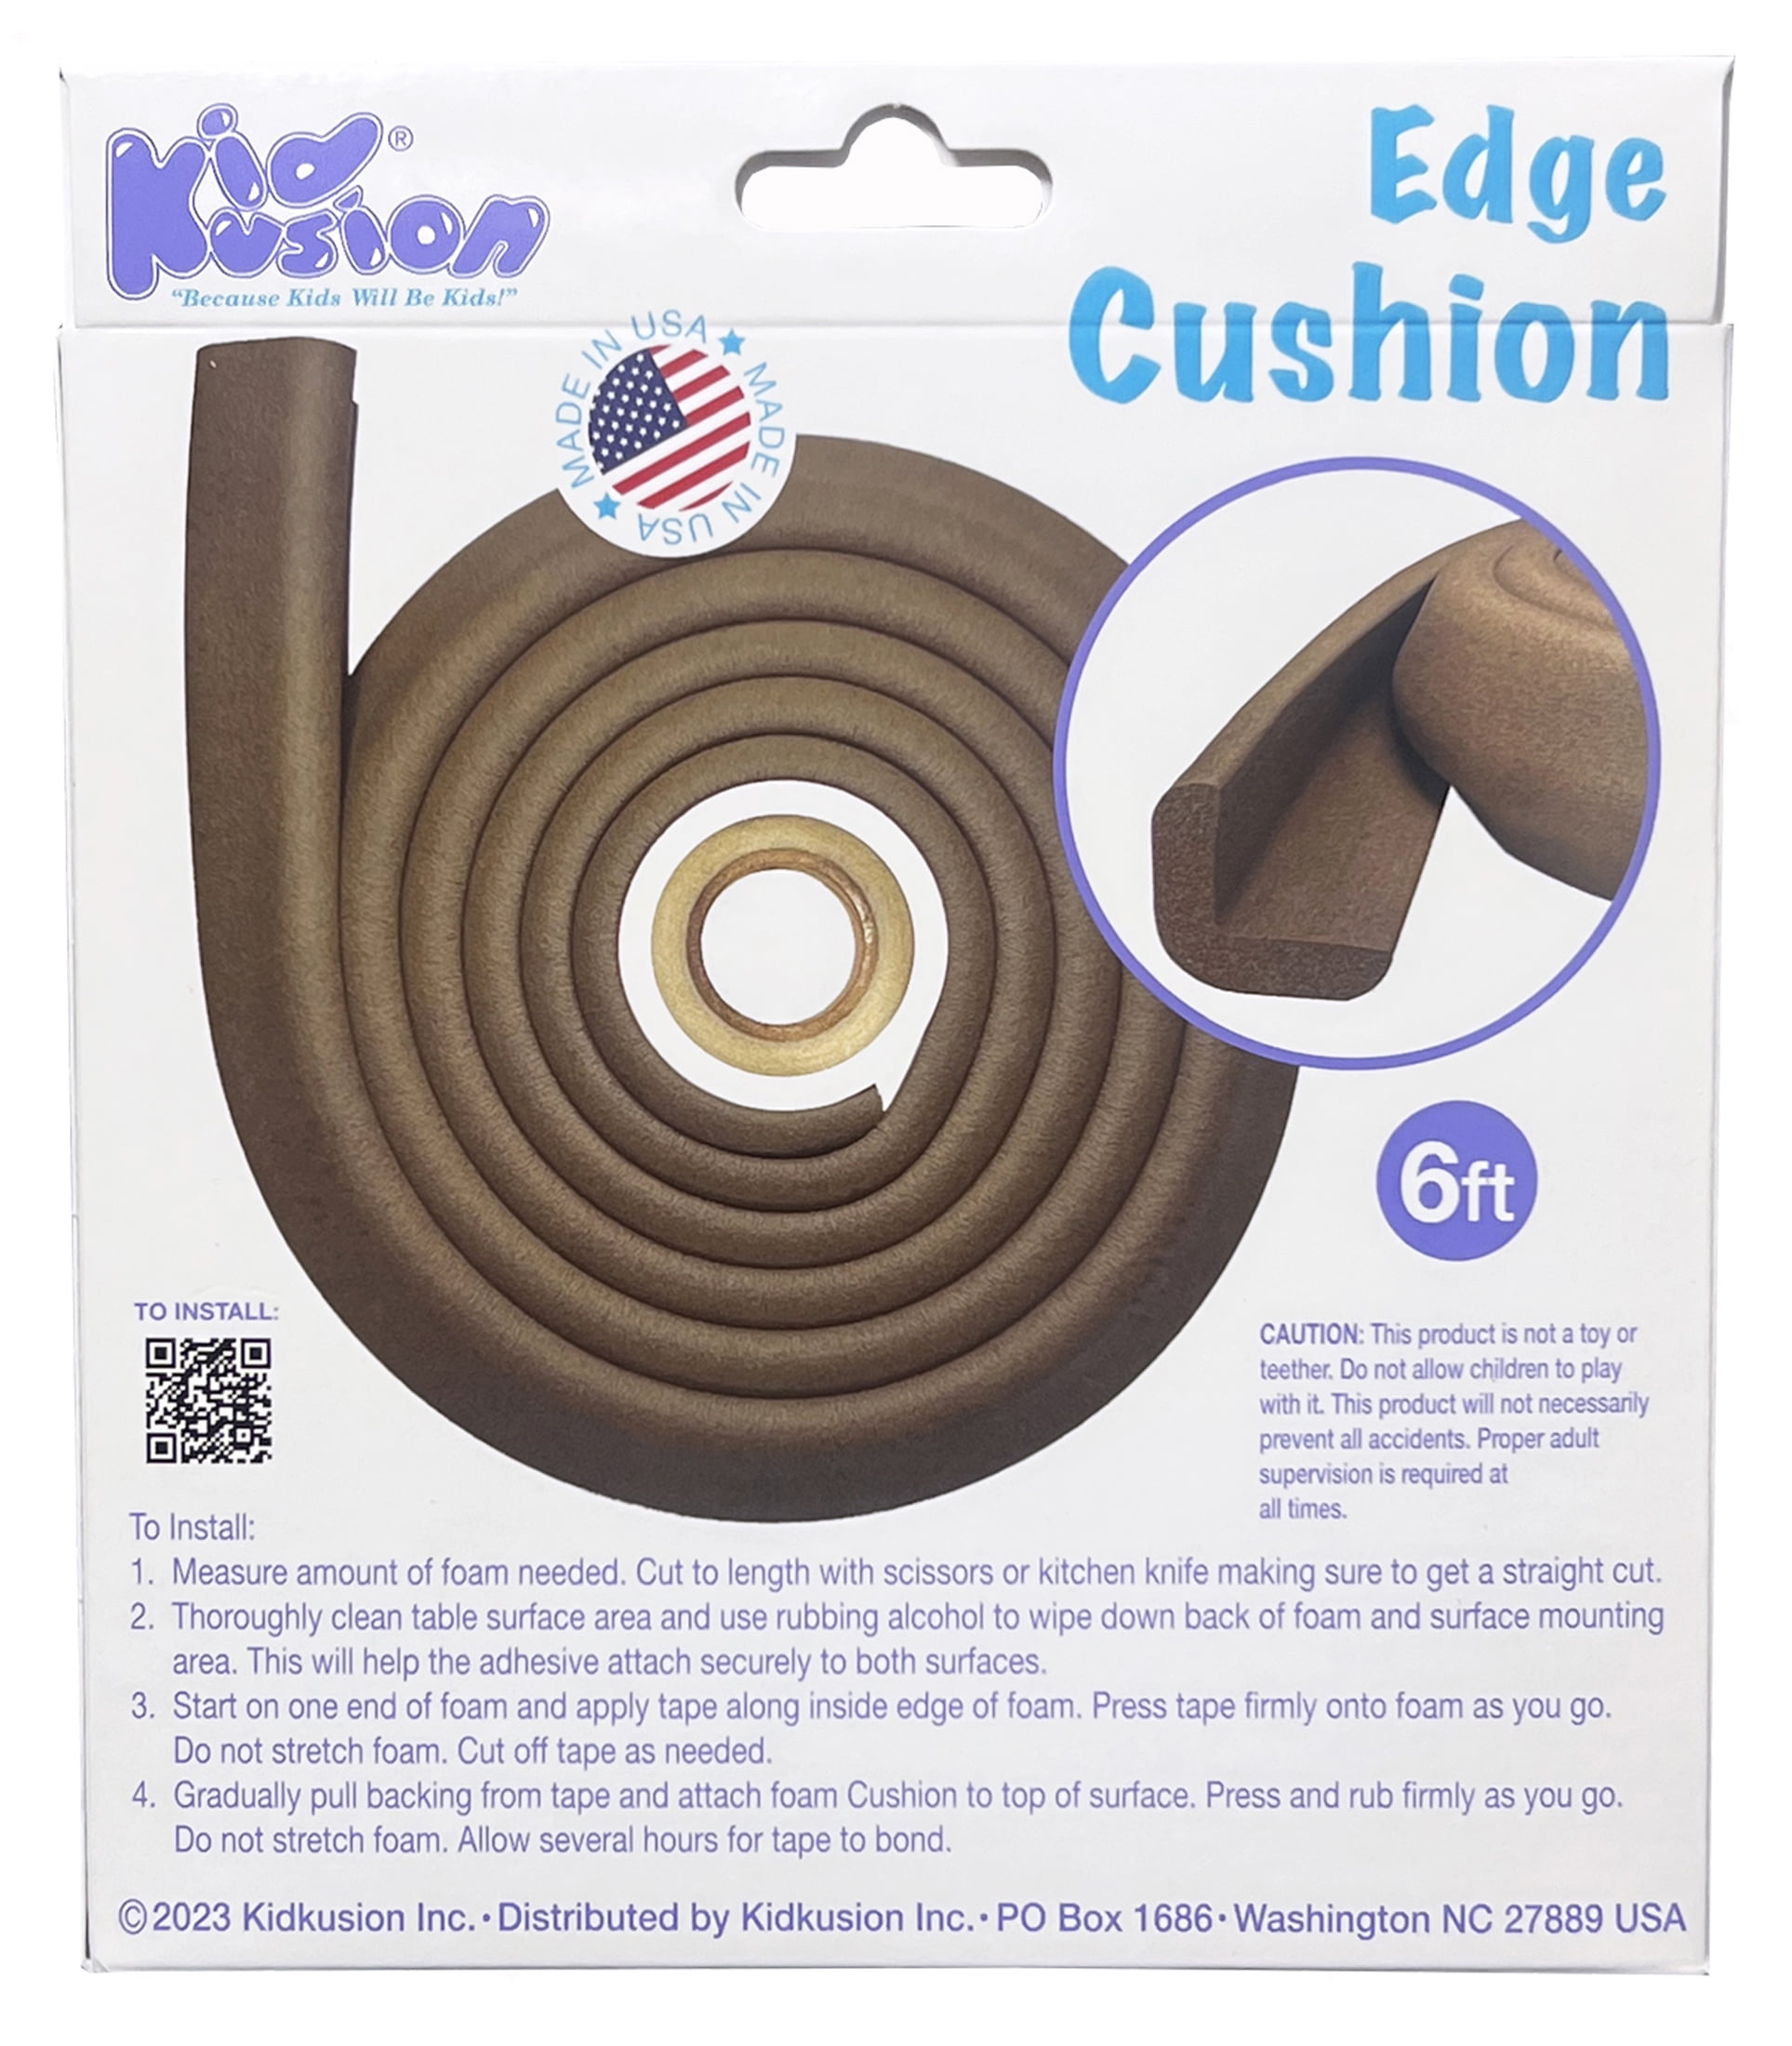 Kid Kushion Edge Cushion Cover edges of furniture Tape included 6